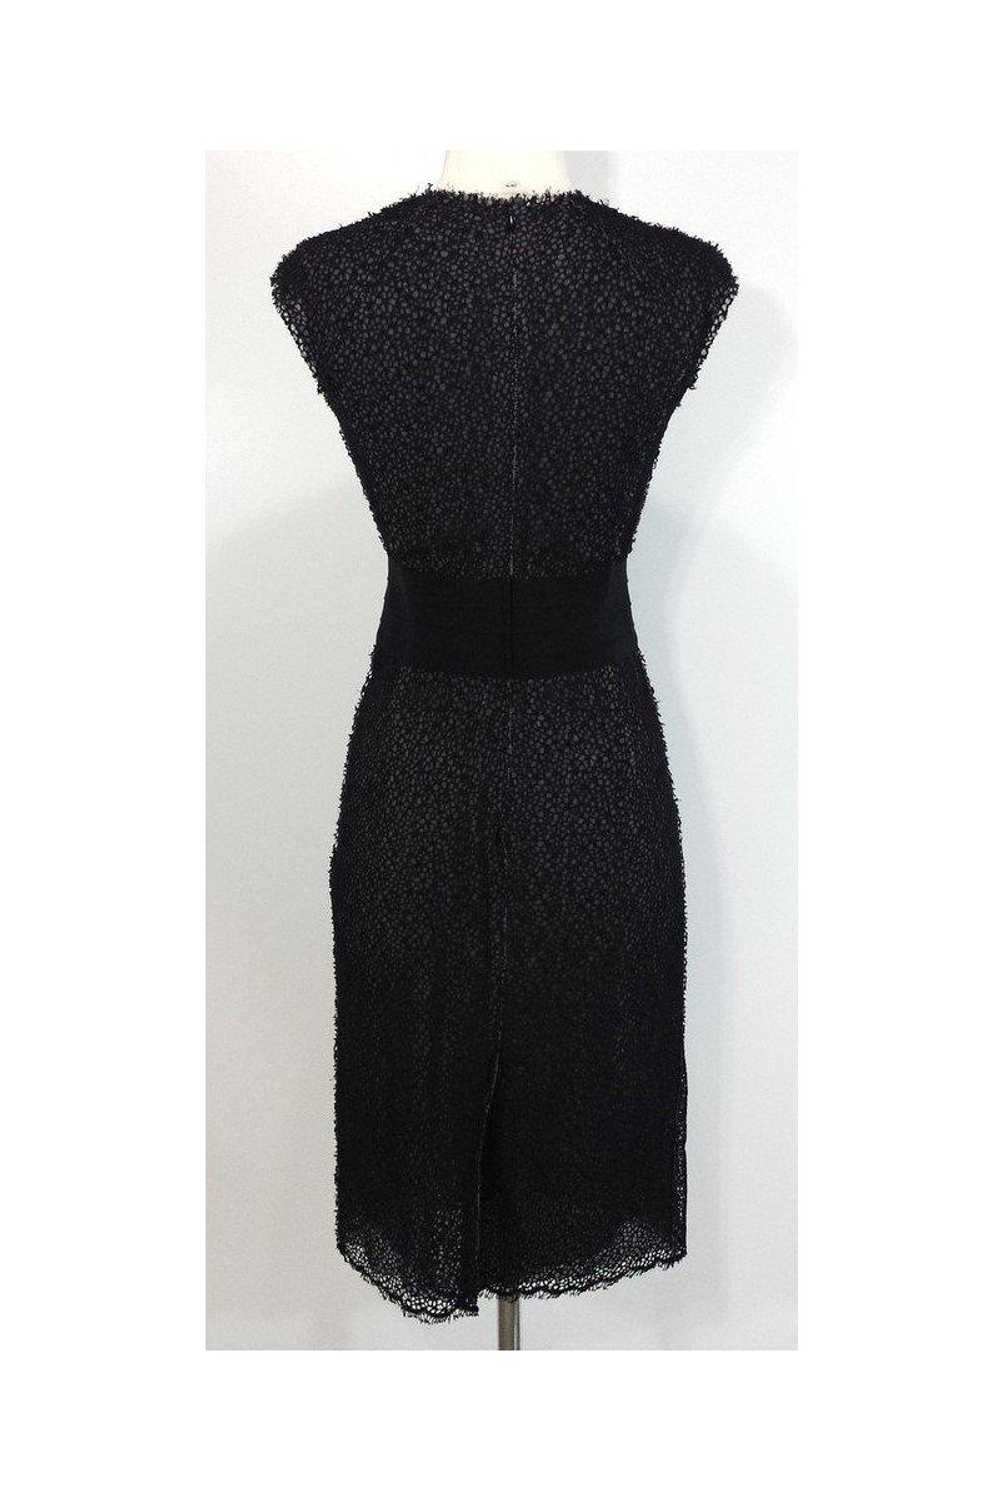 Ports 1961 - Black Lace Cap Sleeve Dress Sz 2 - image 3